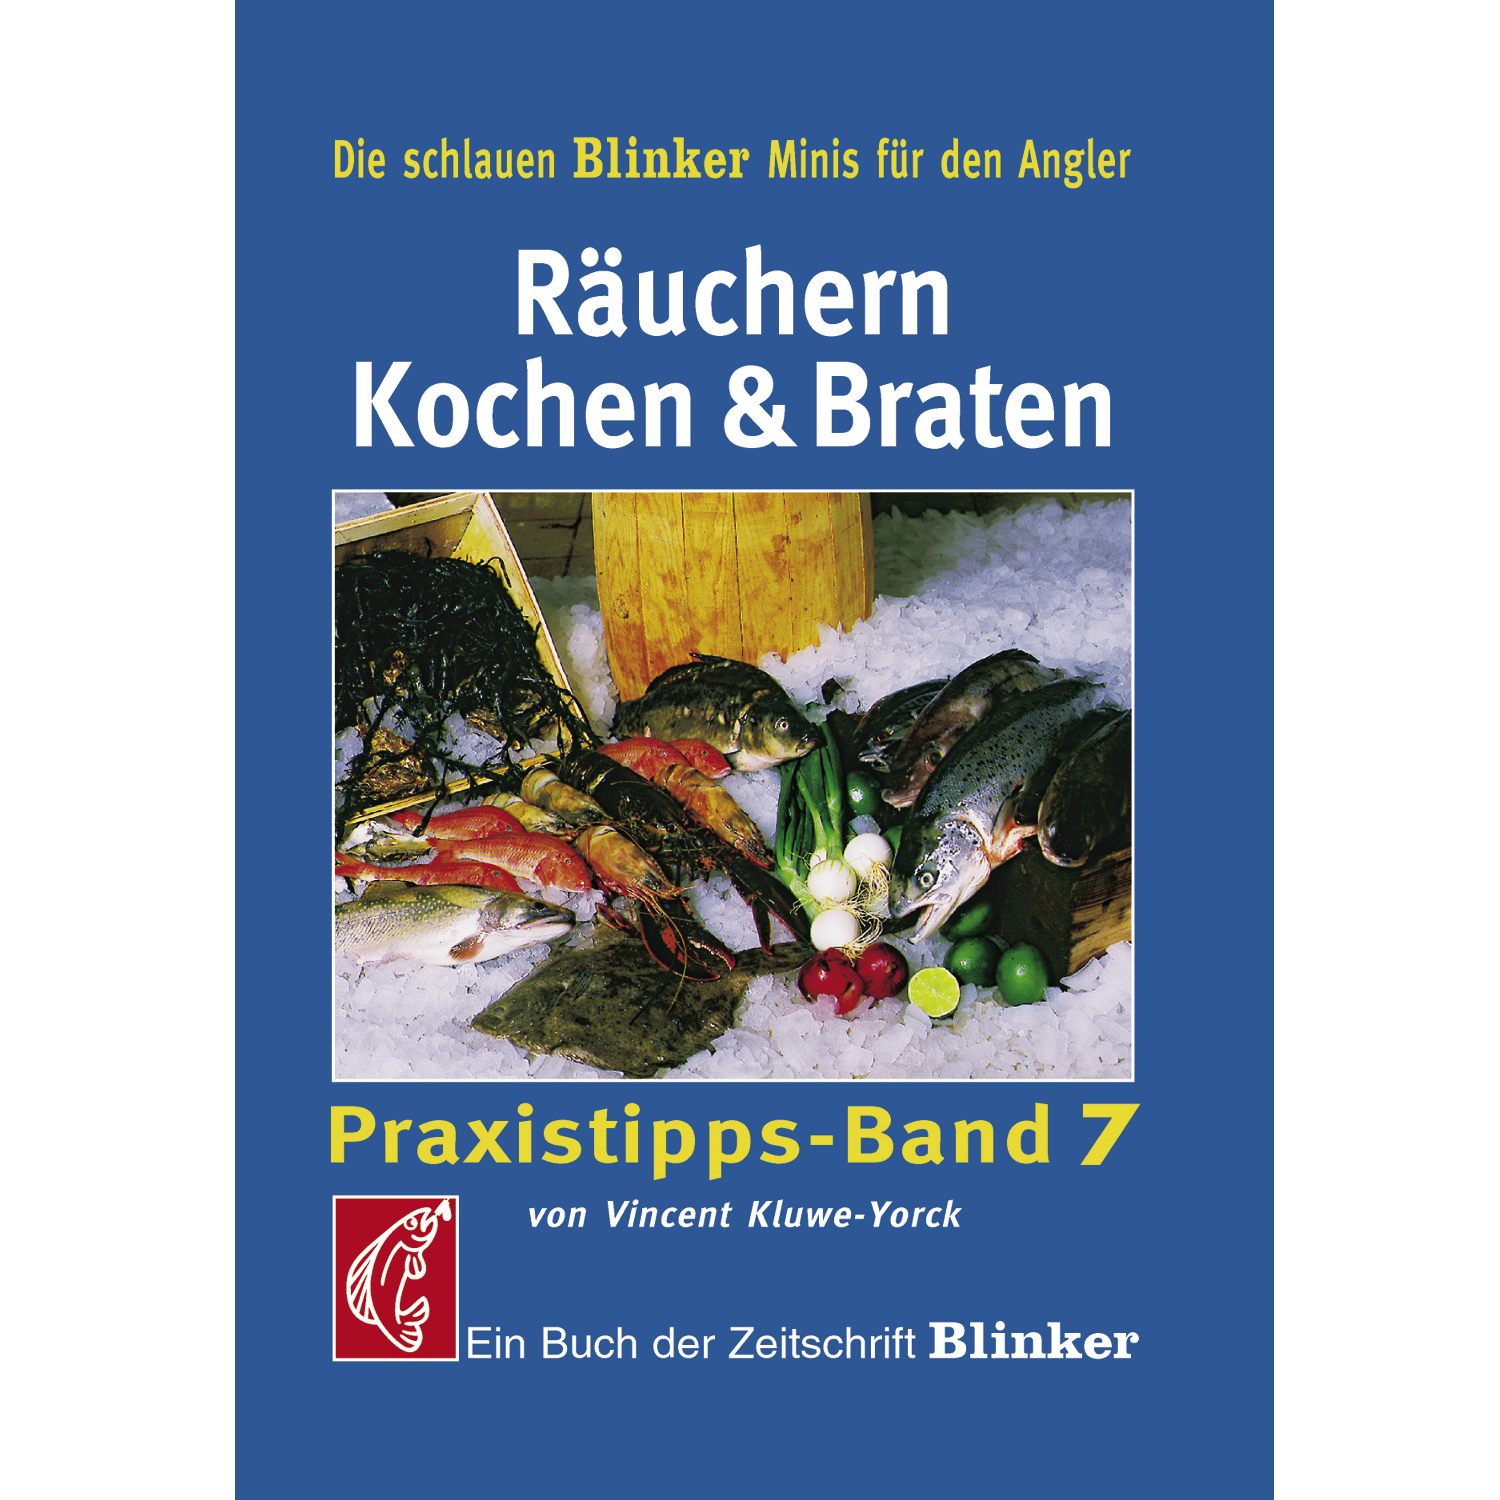 Räuchern, Kochen & Braten from „Blinker“ 